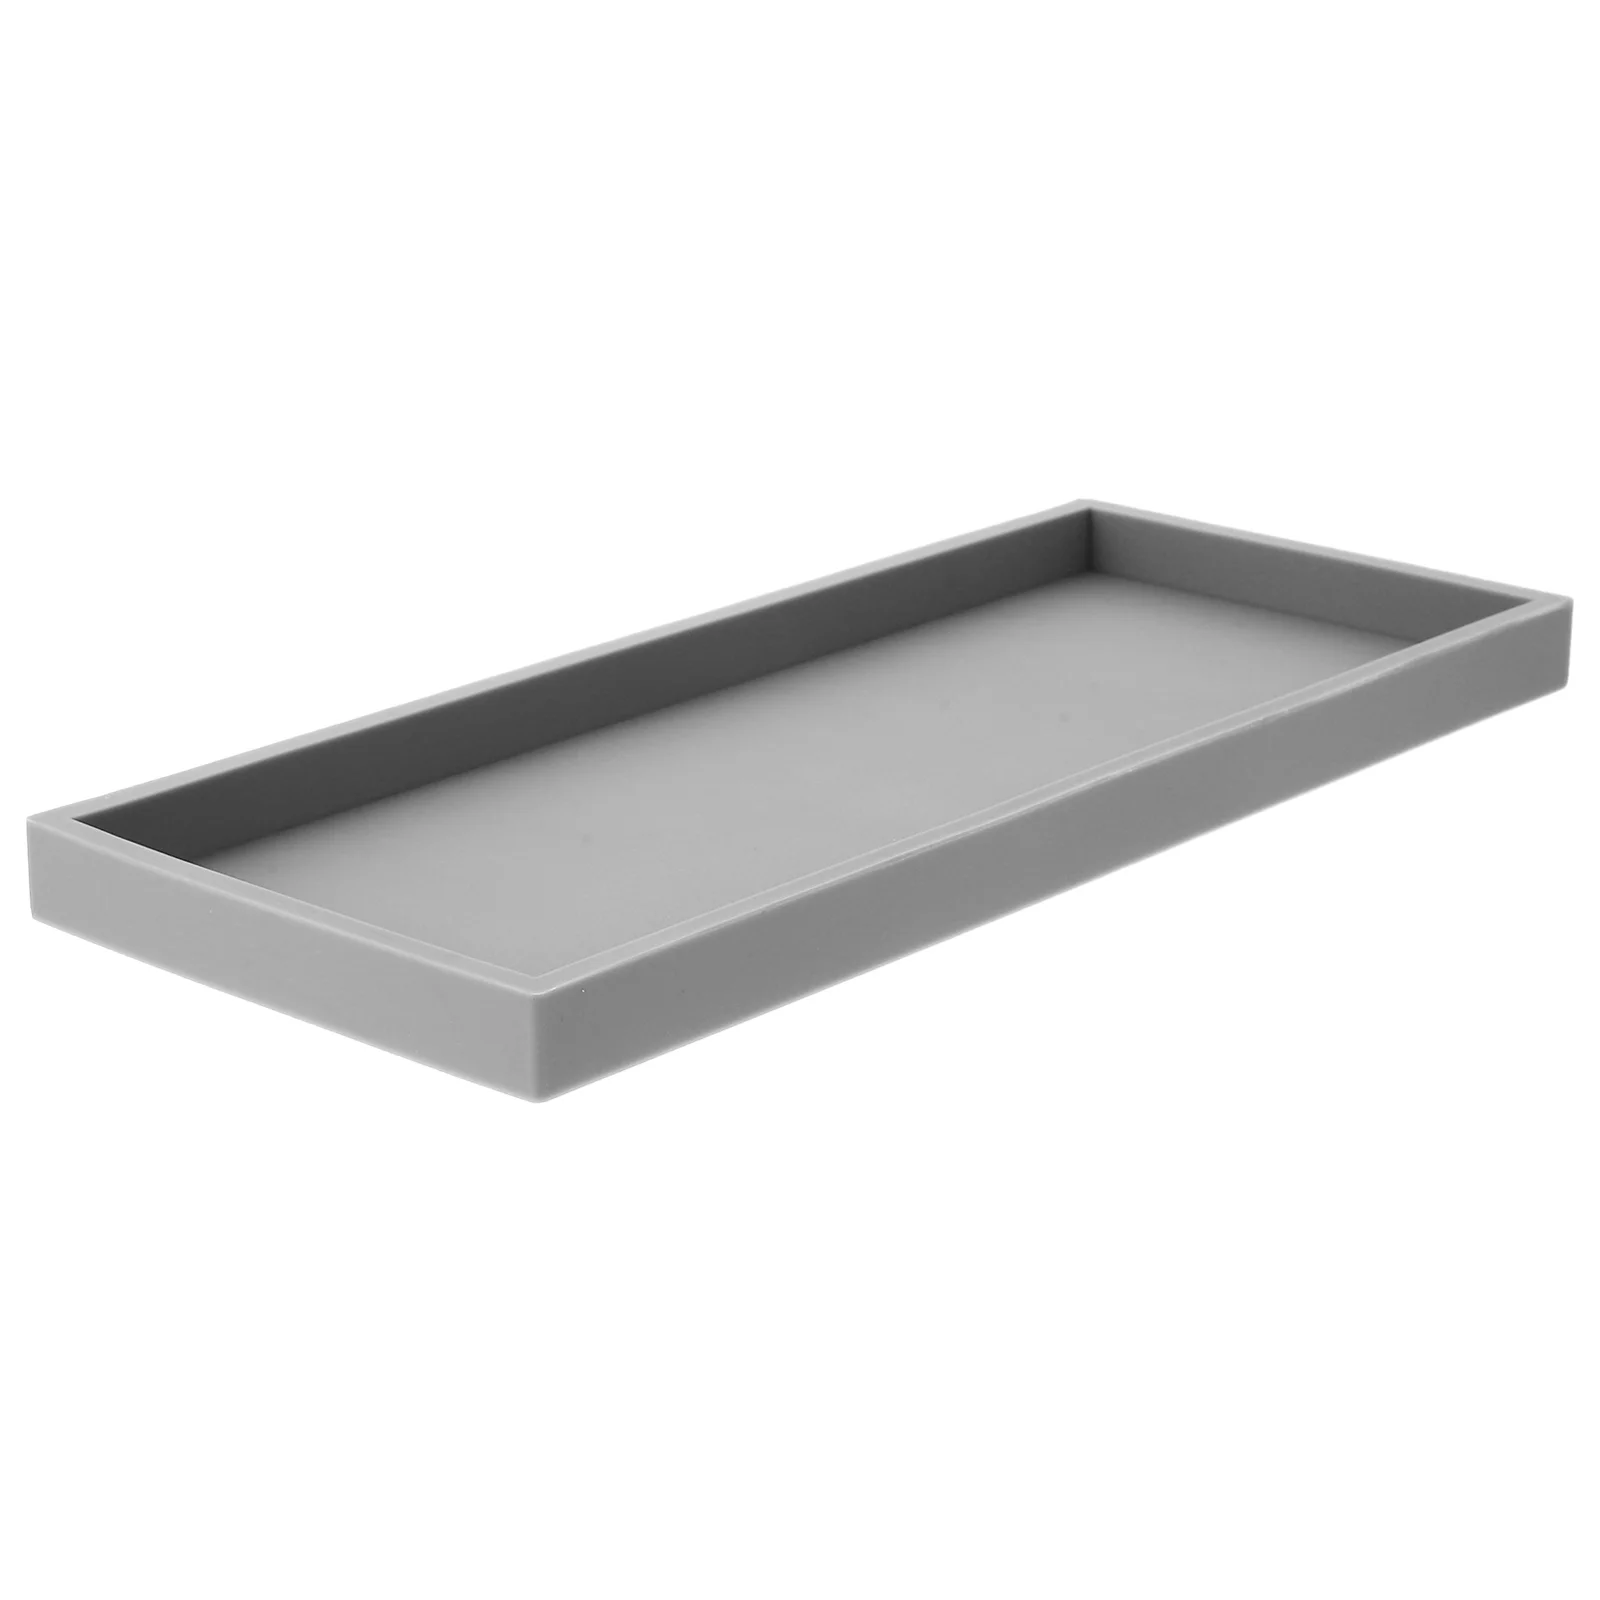 

Gray Tray Kitchen Counter Jewelry Trays Countertop Silica Gel Bath Tub Vanity